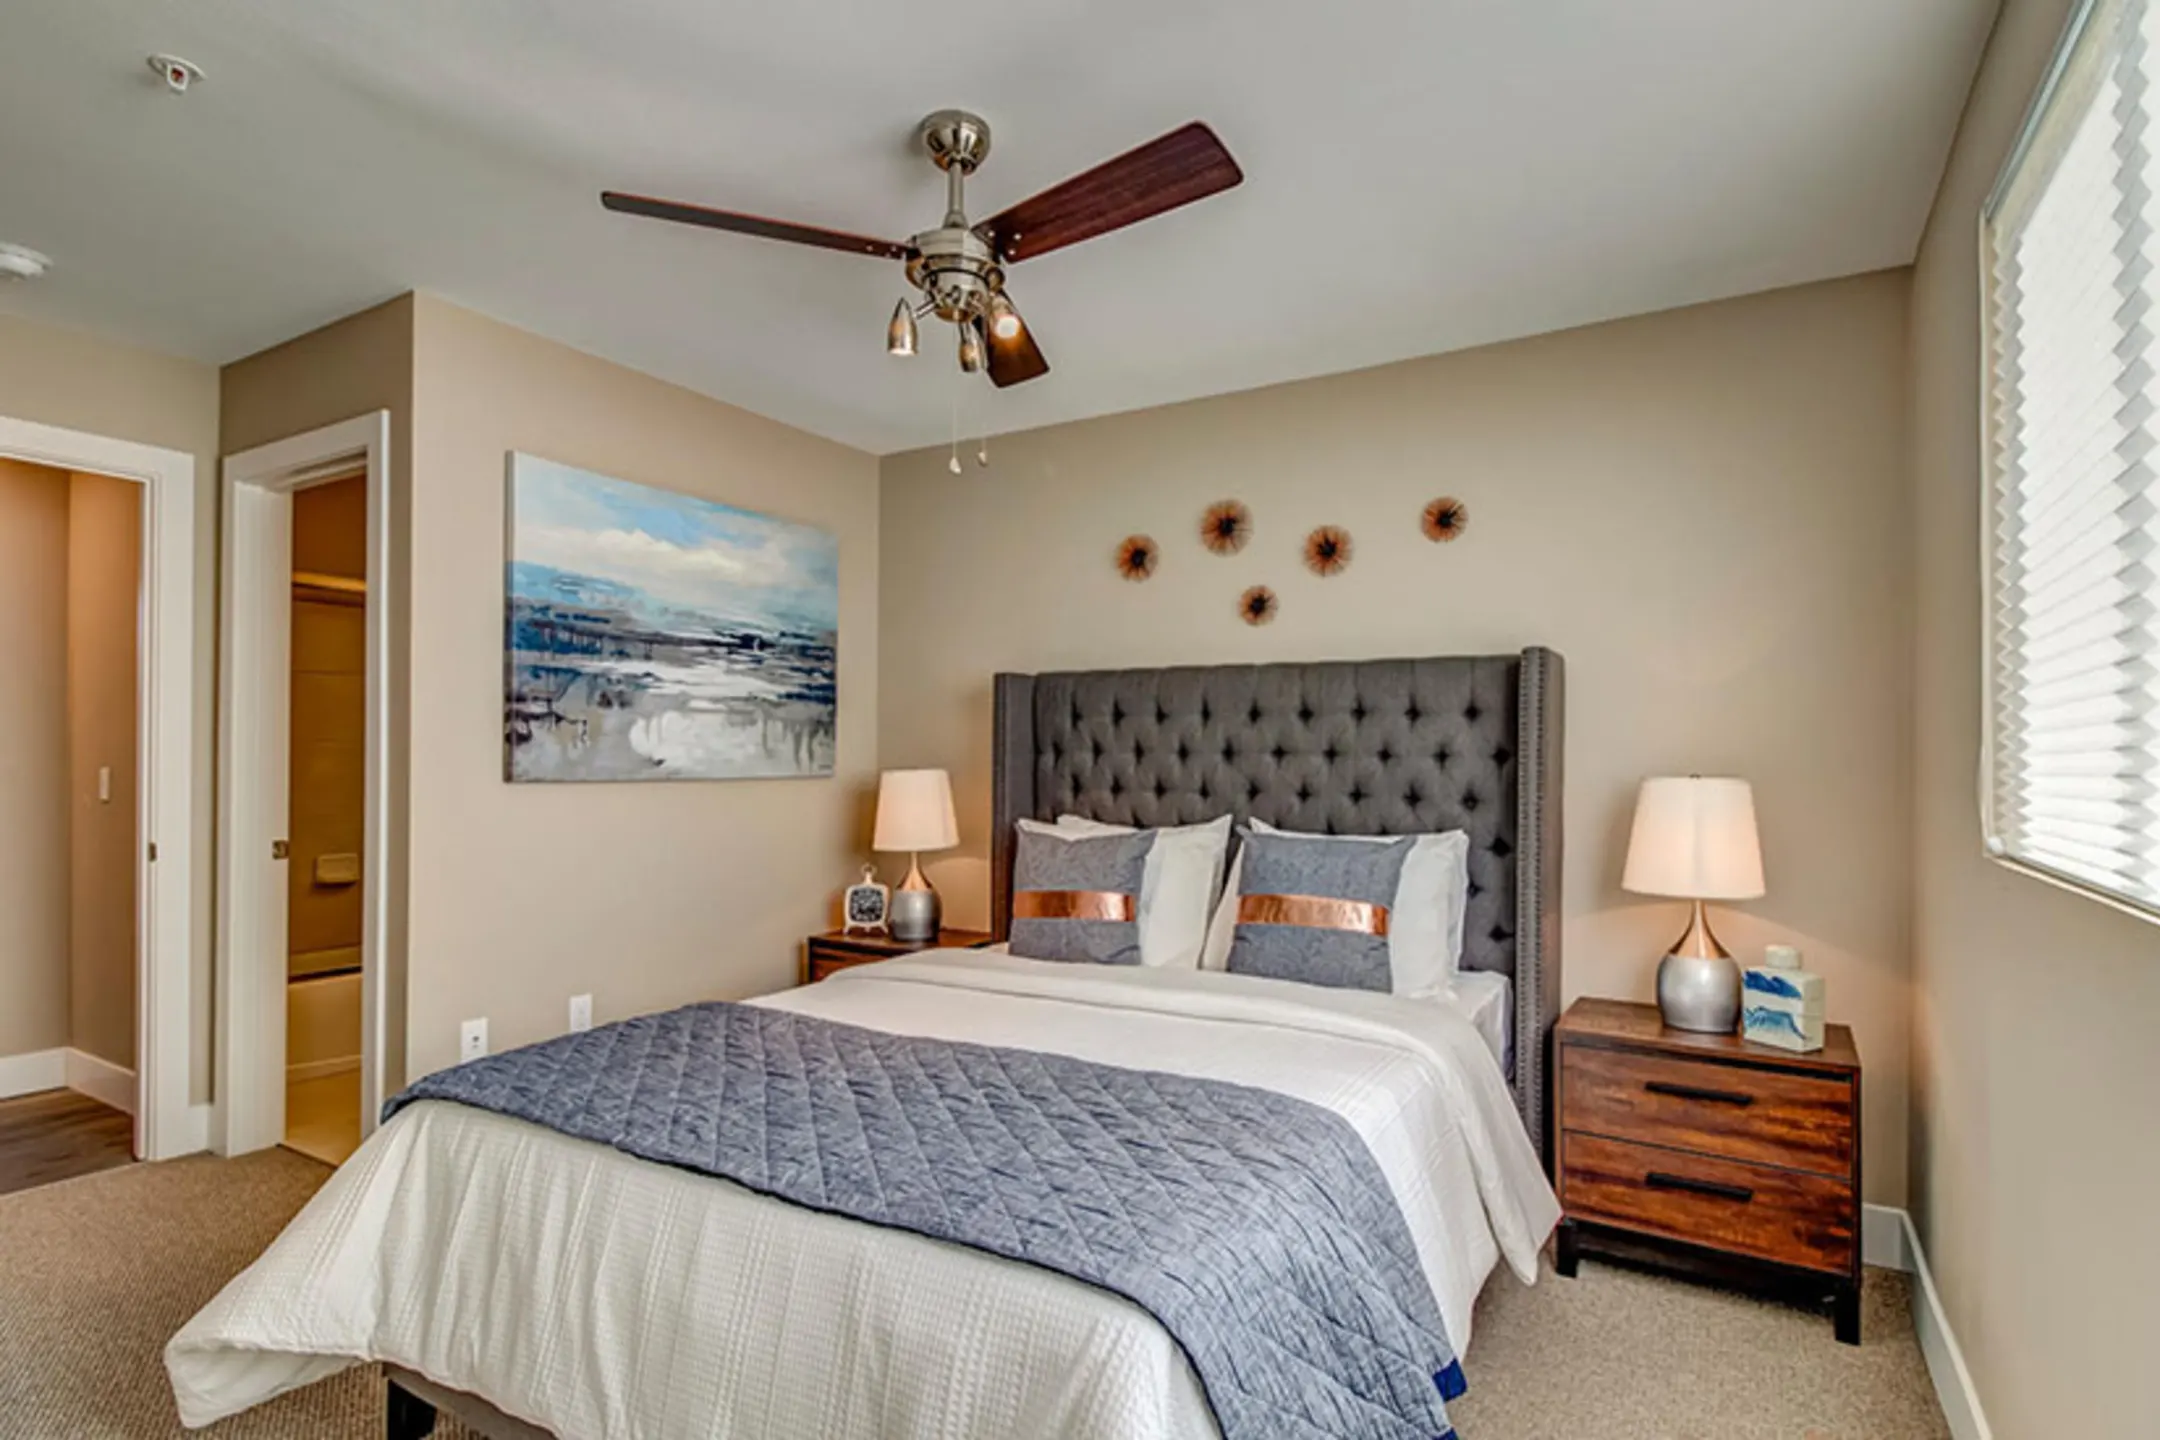 Bedroom - Riverside Park Apartments - Reno, NV